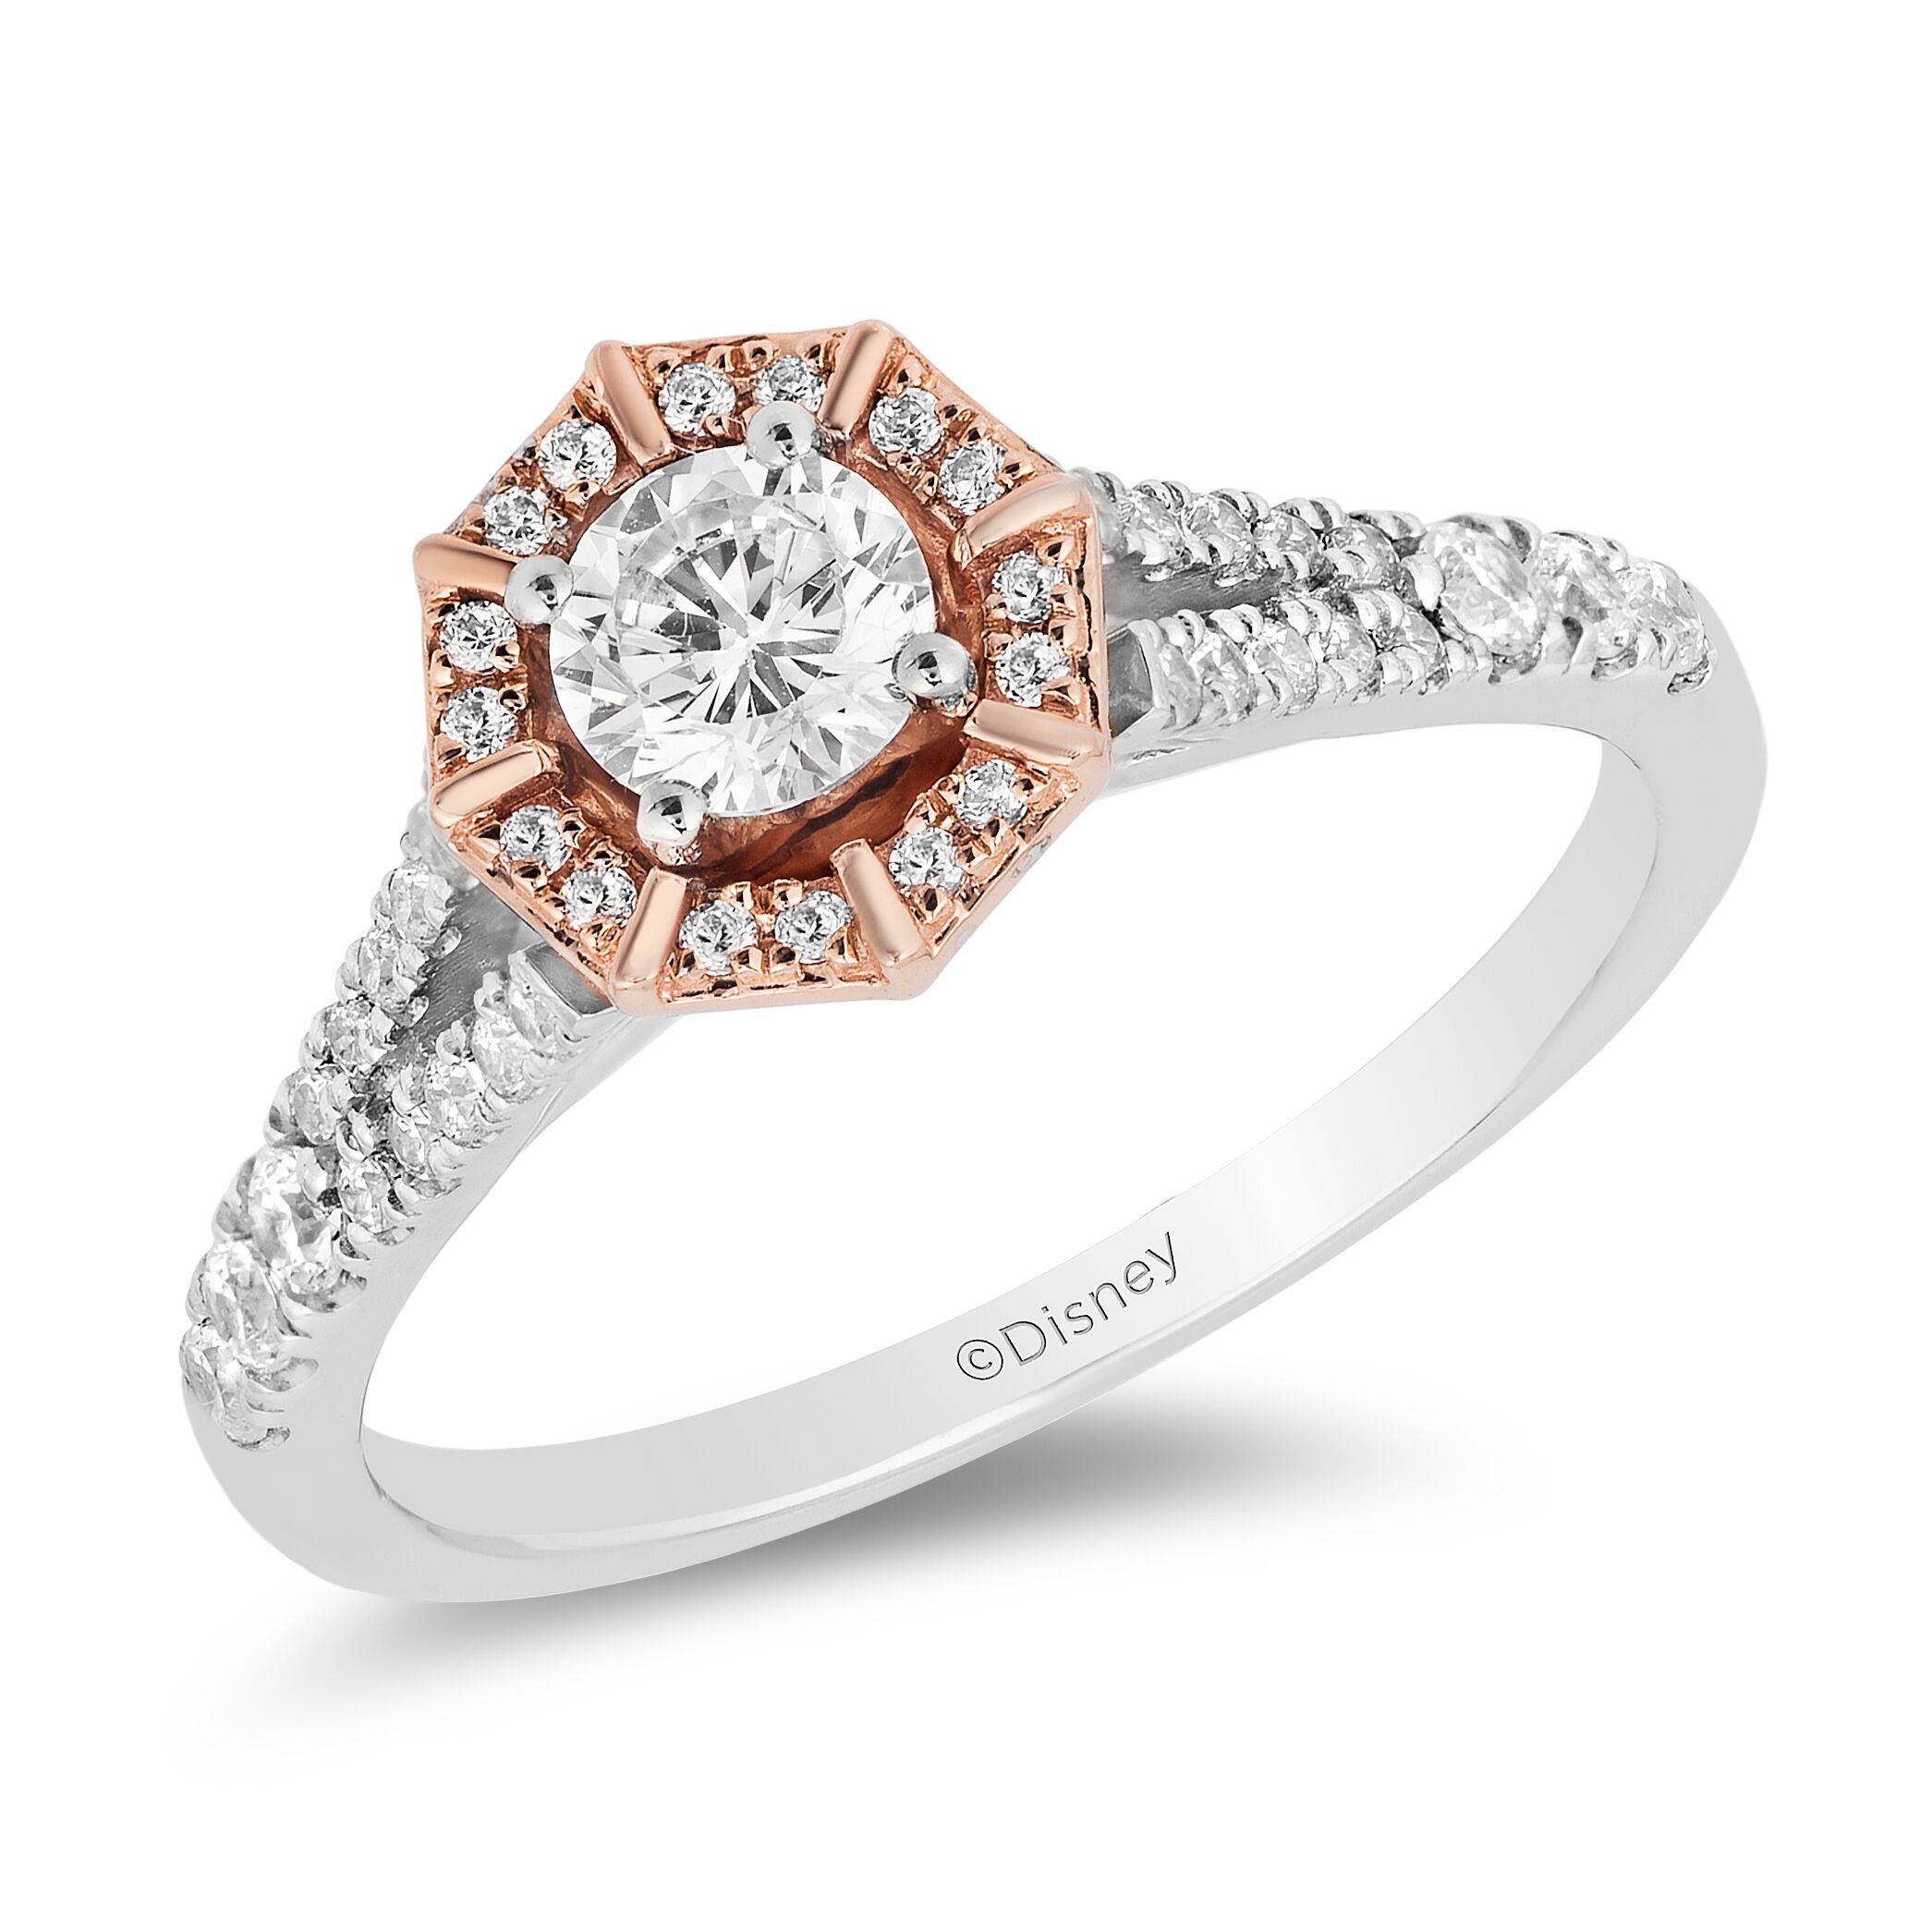 Samuel B Black Spinel Beaded Ring 001-605-06679 | Goldstein's Jewelers |  Mobile, AL